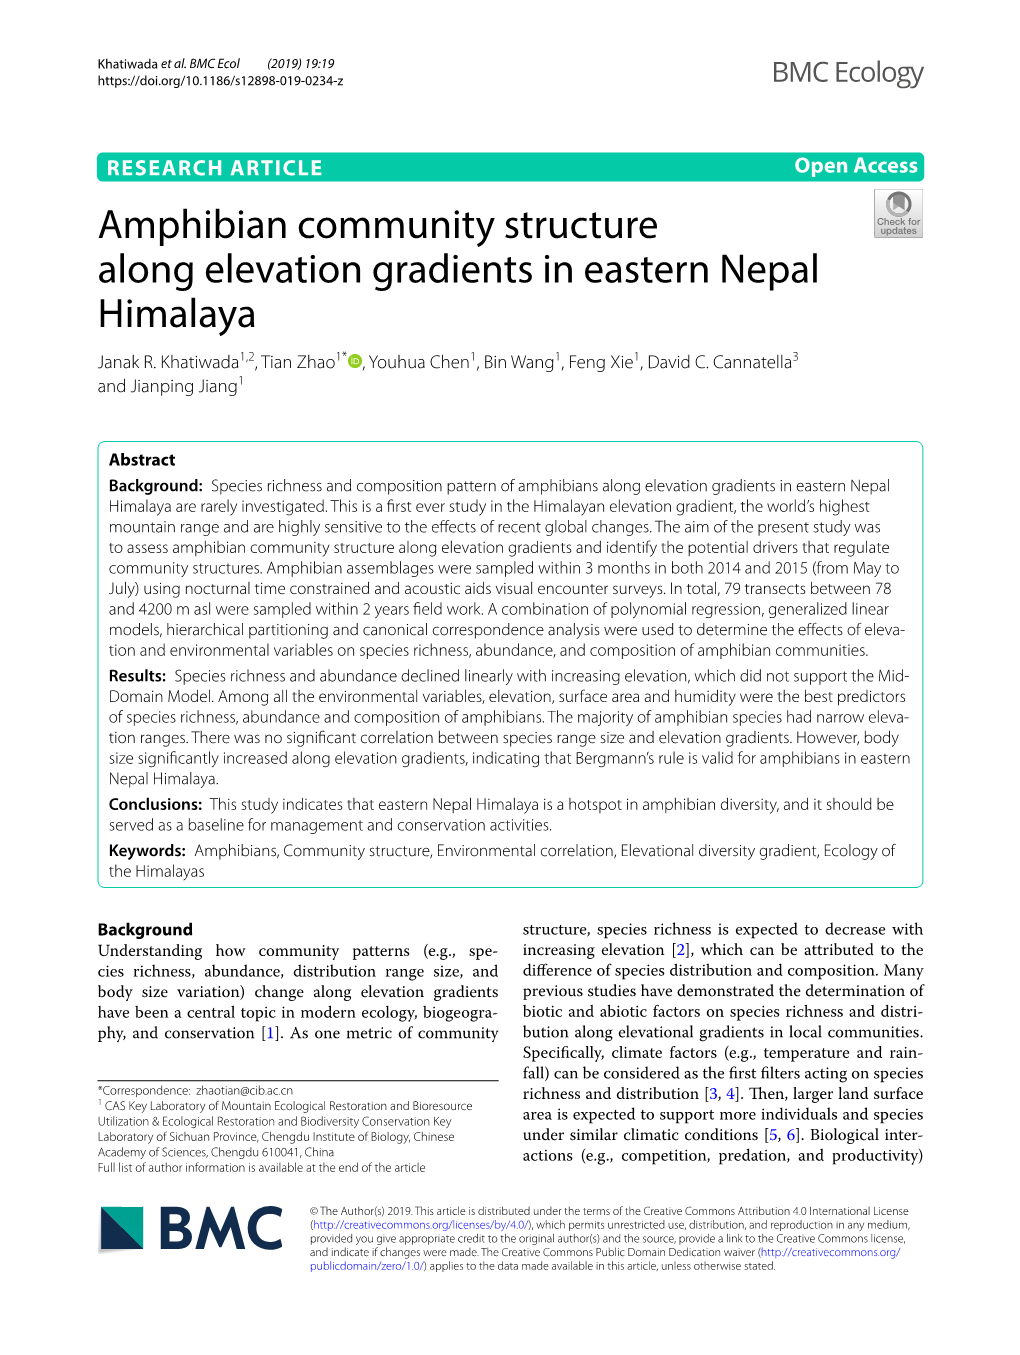 Amphibian Community Structure Along Elevation Gradients in Eastern Nepal Himalaya Janak R